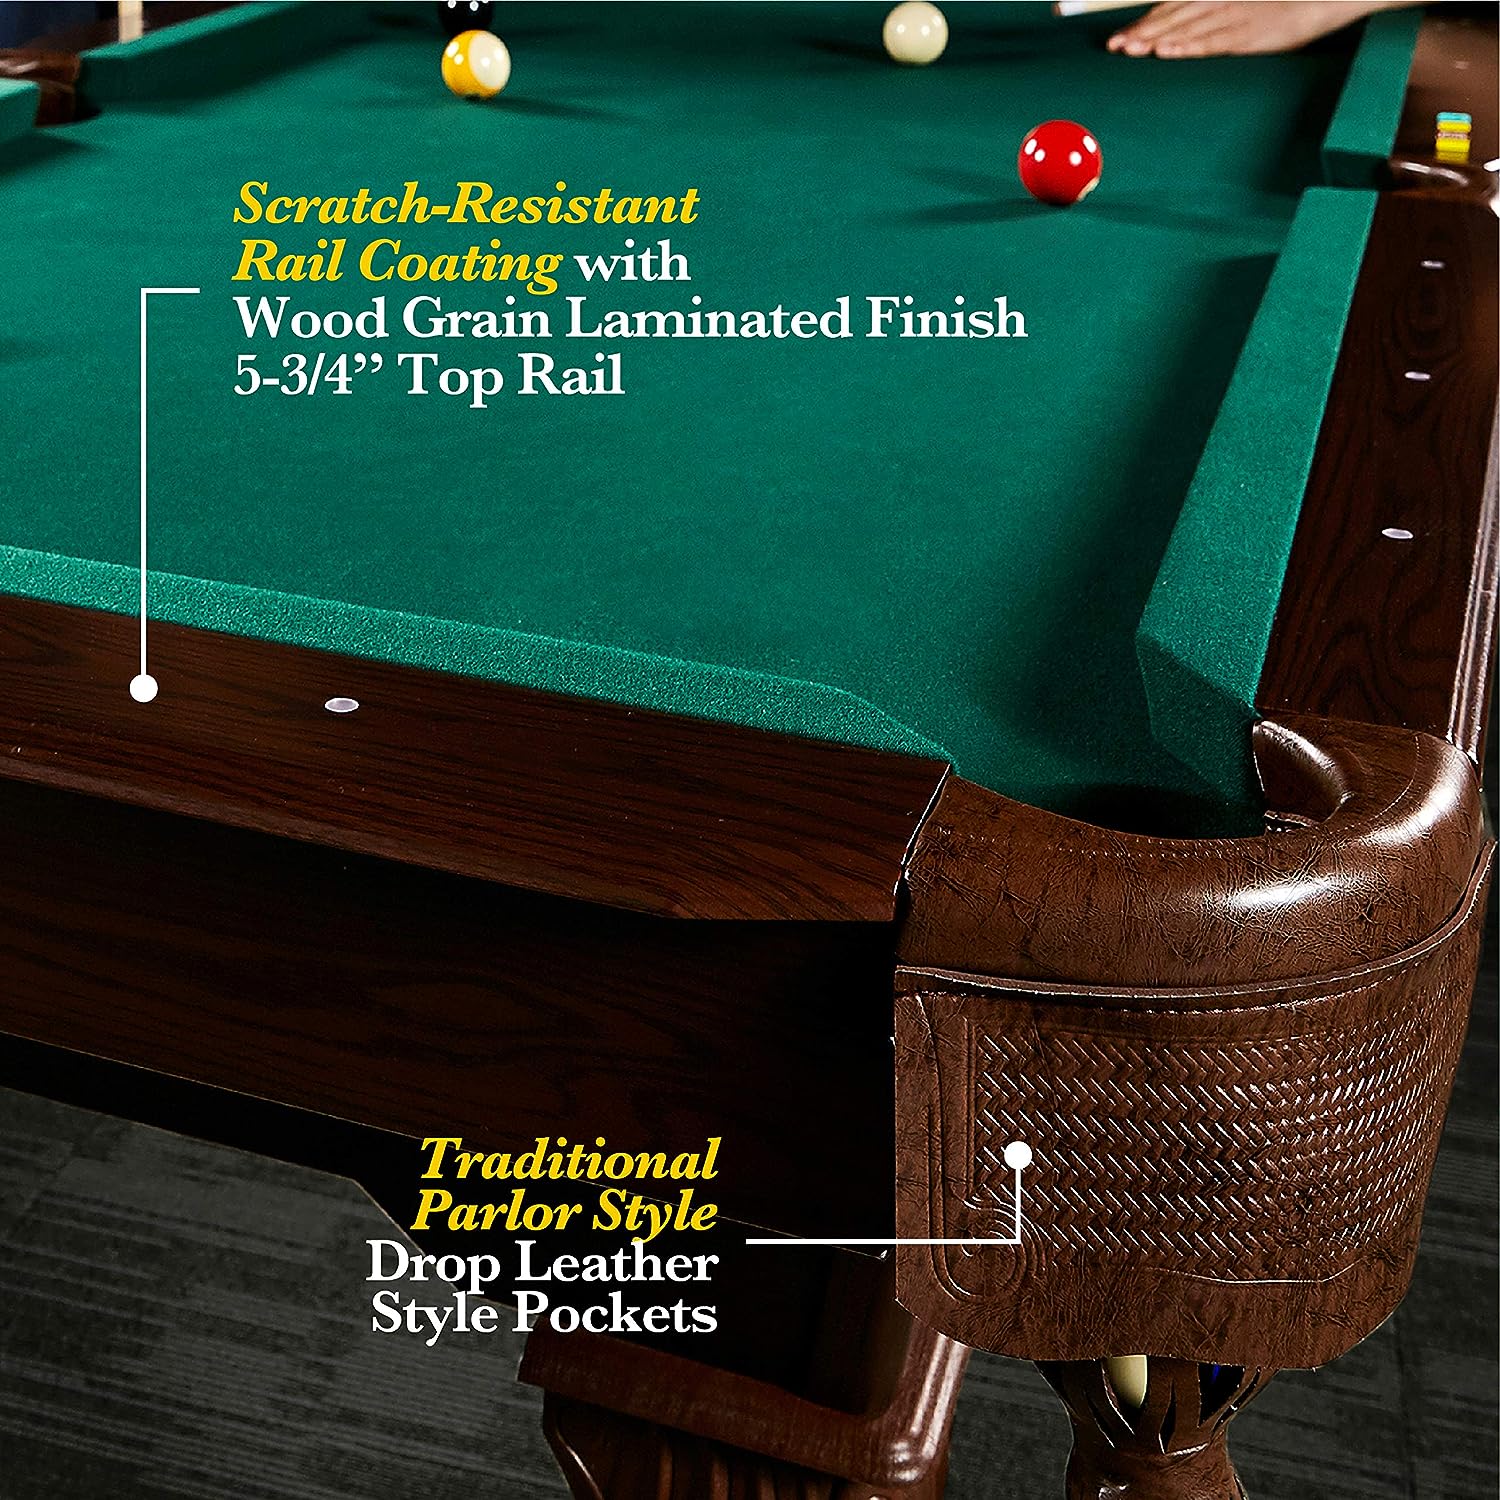 Barrington Billiards 7.5' Springdale Drop Pocket Table - $650